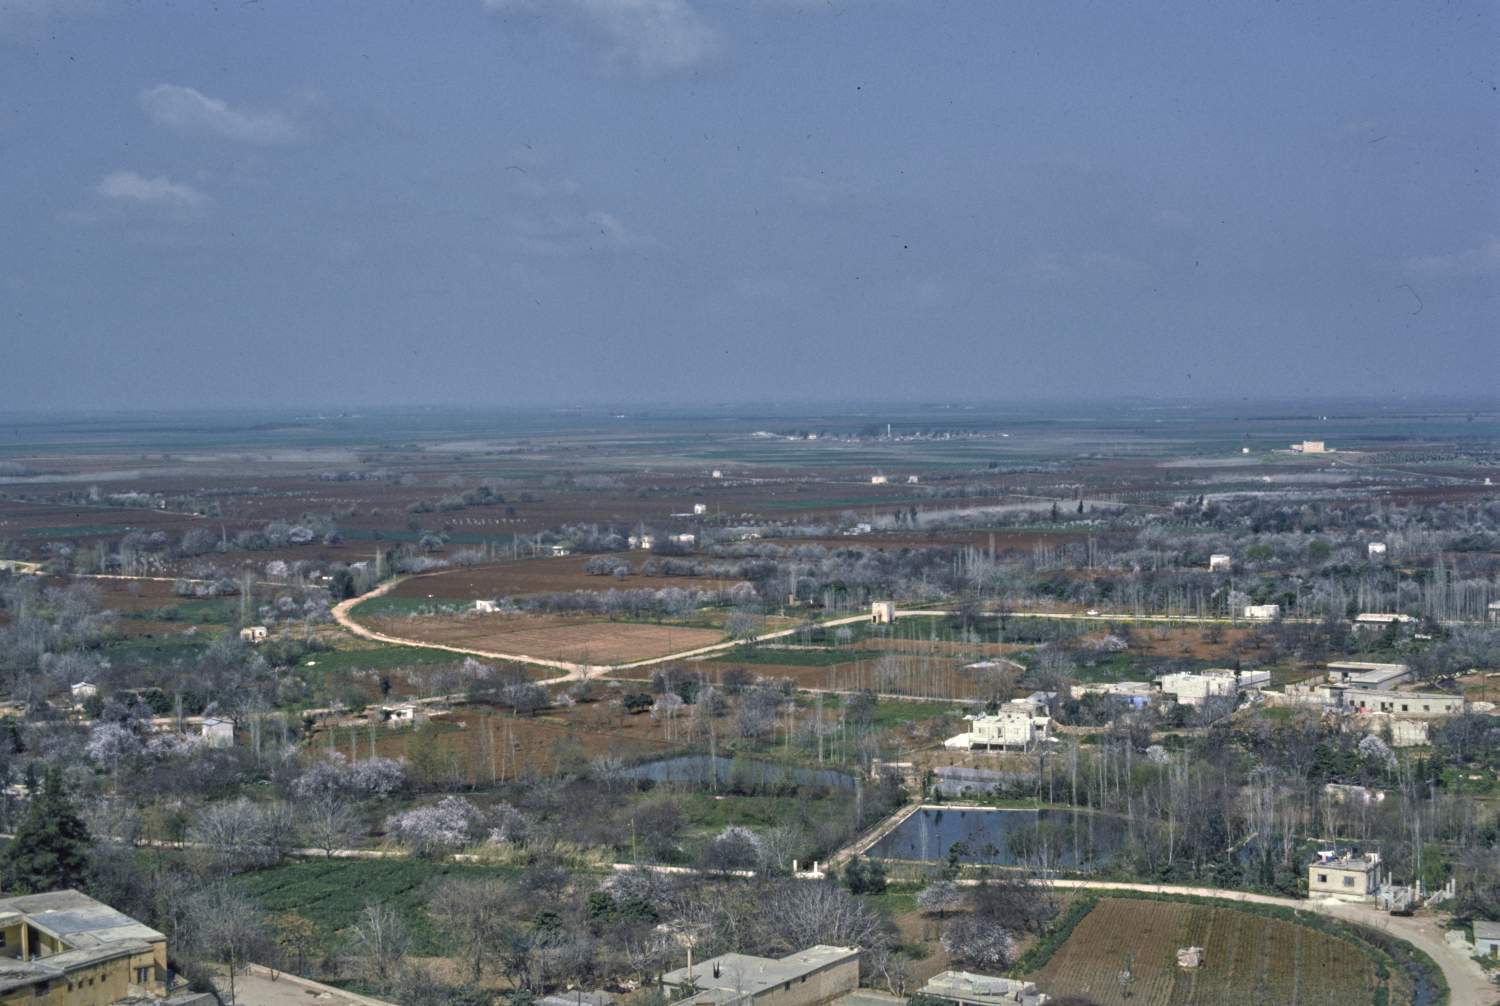 View of valley near the town of Harim (Haram) in northwestern Syria near Turkish border.